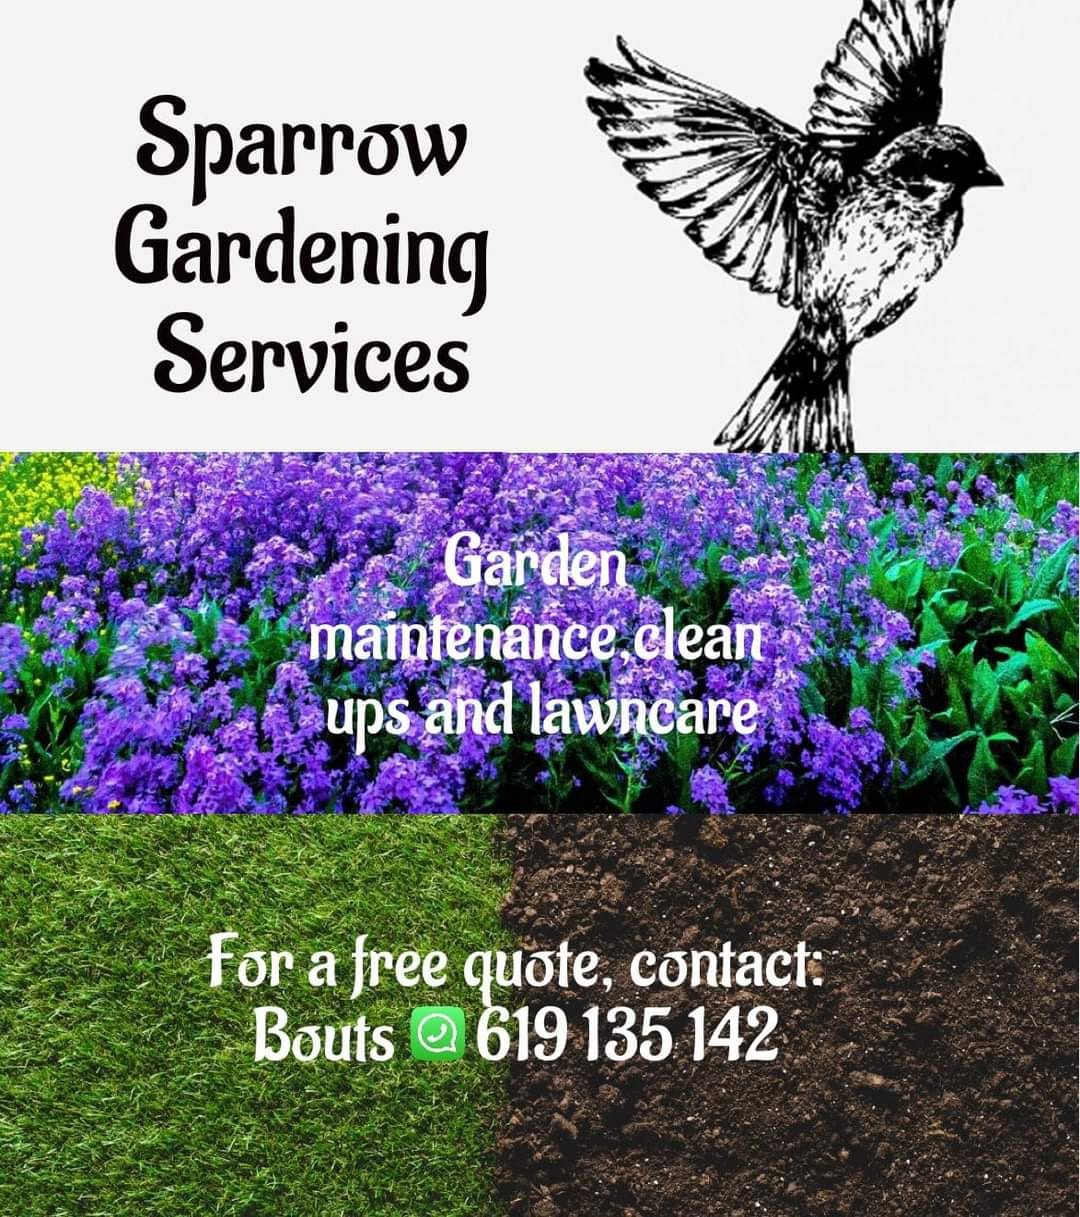 Garden Maintenance, Cleanups and Lawncare.